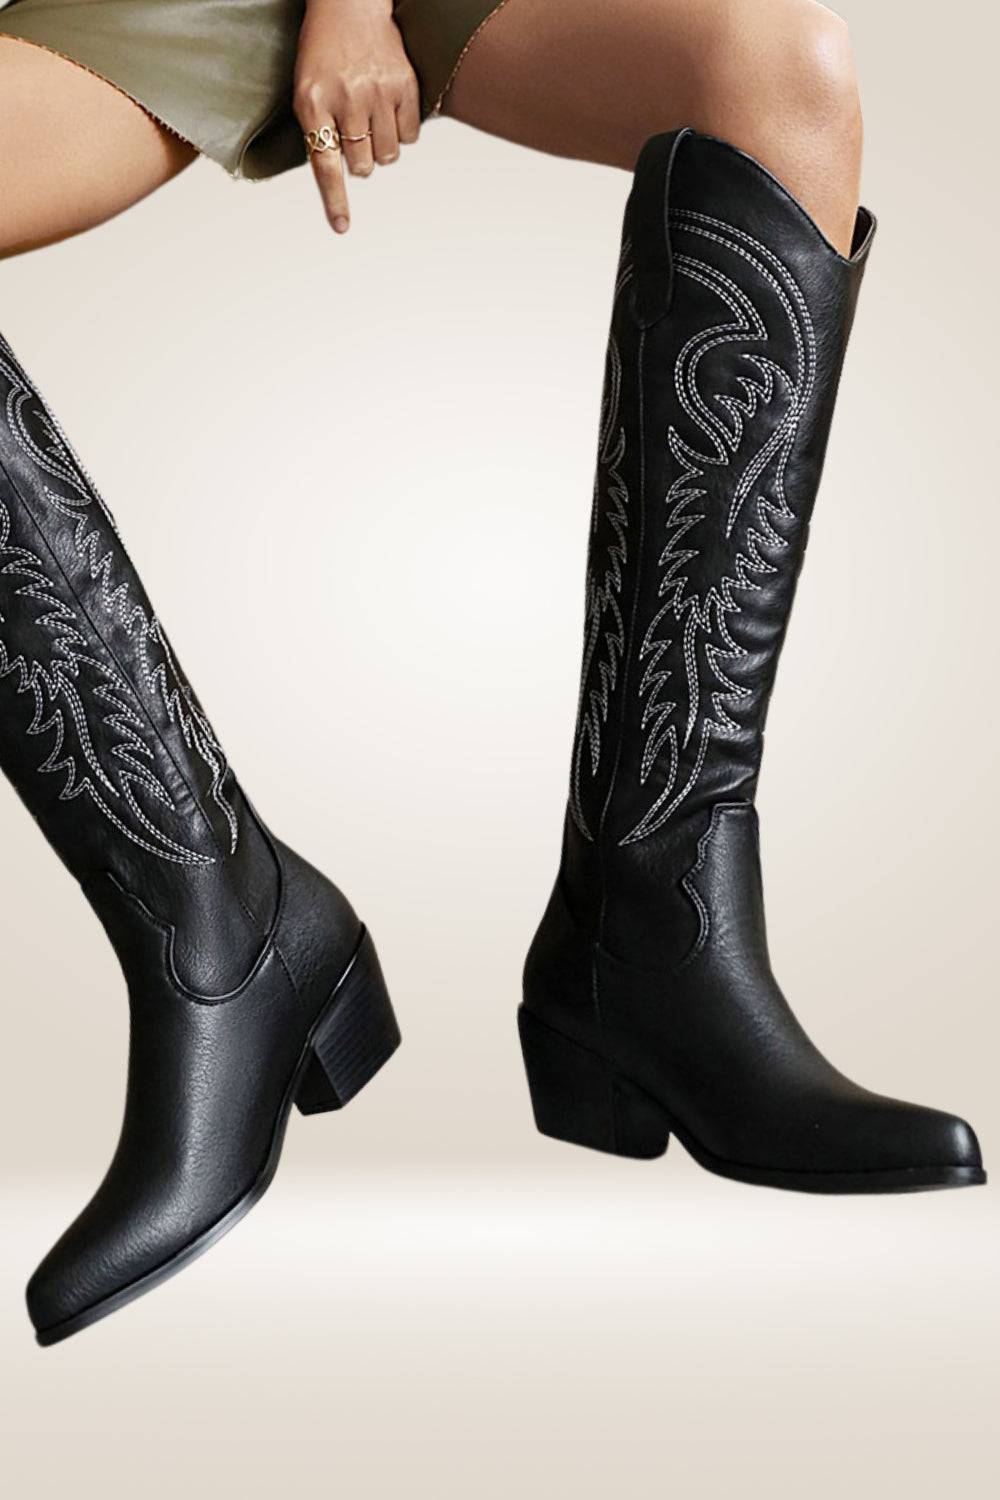 Knee High Black Cowboy Boots - TGC Boutique - Cowboy Boots